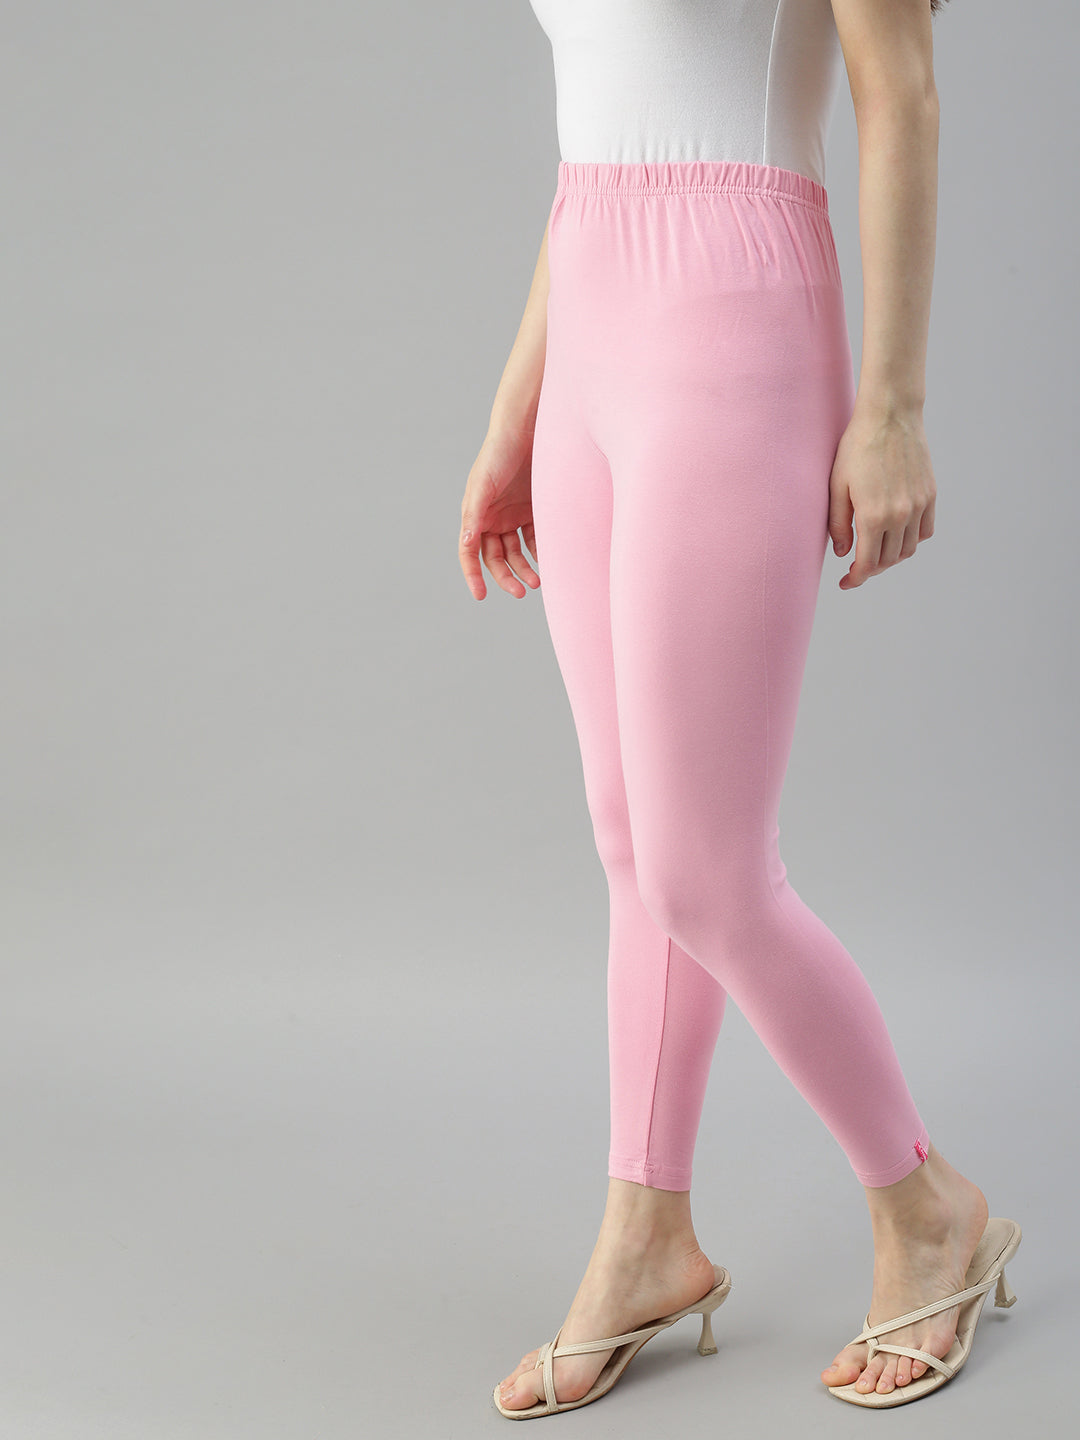 Pure Cotton Legging (Light Pink) - Shubharambh99